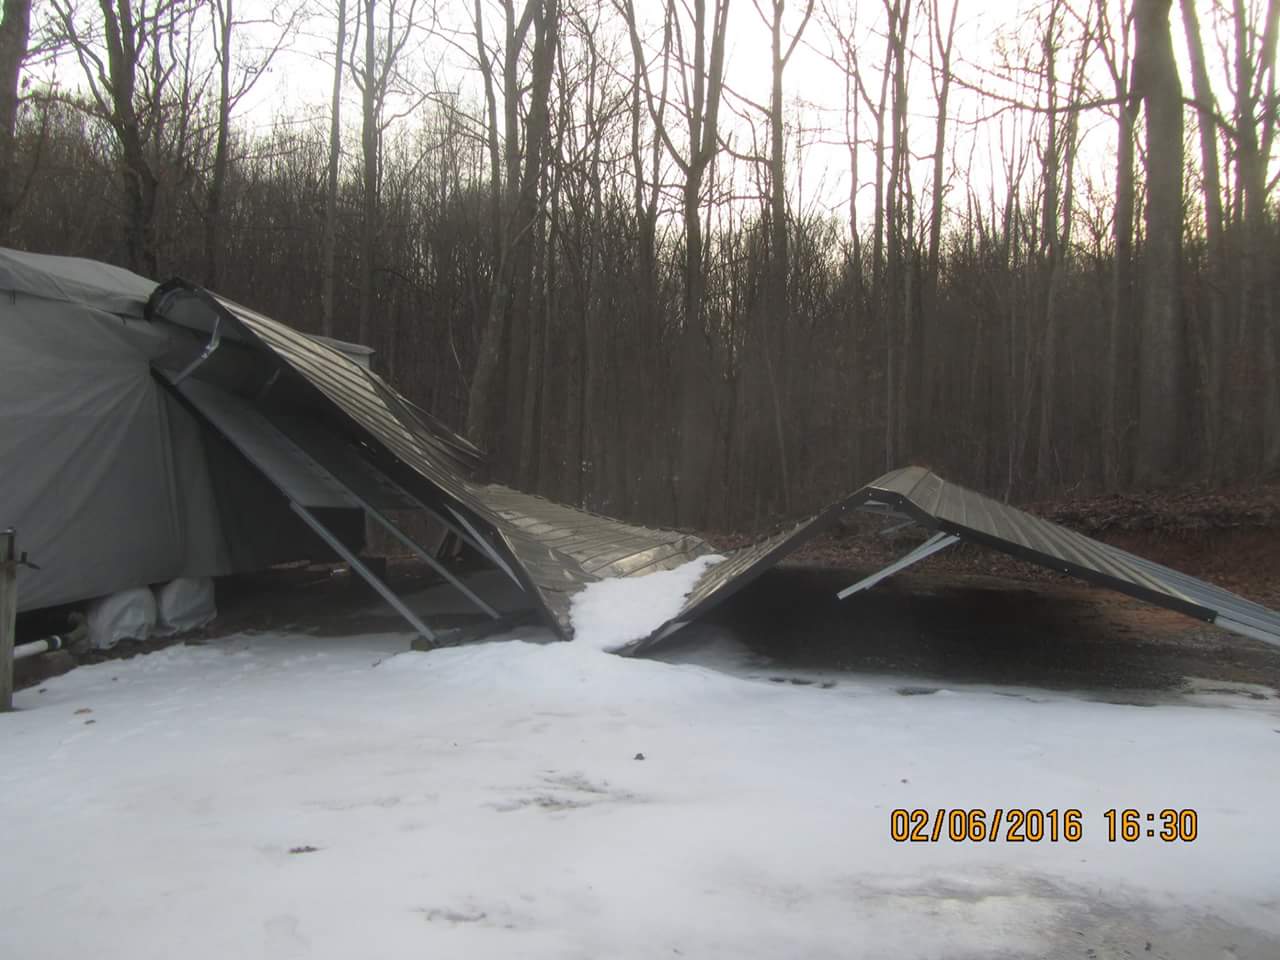 Carport Collapsed into camper